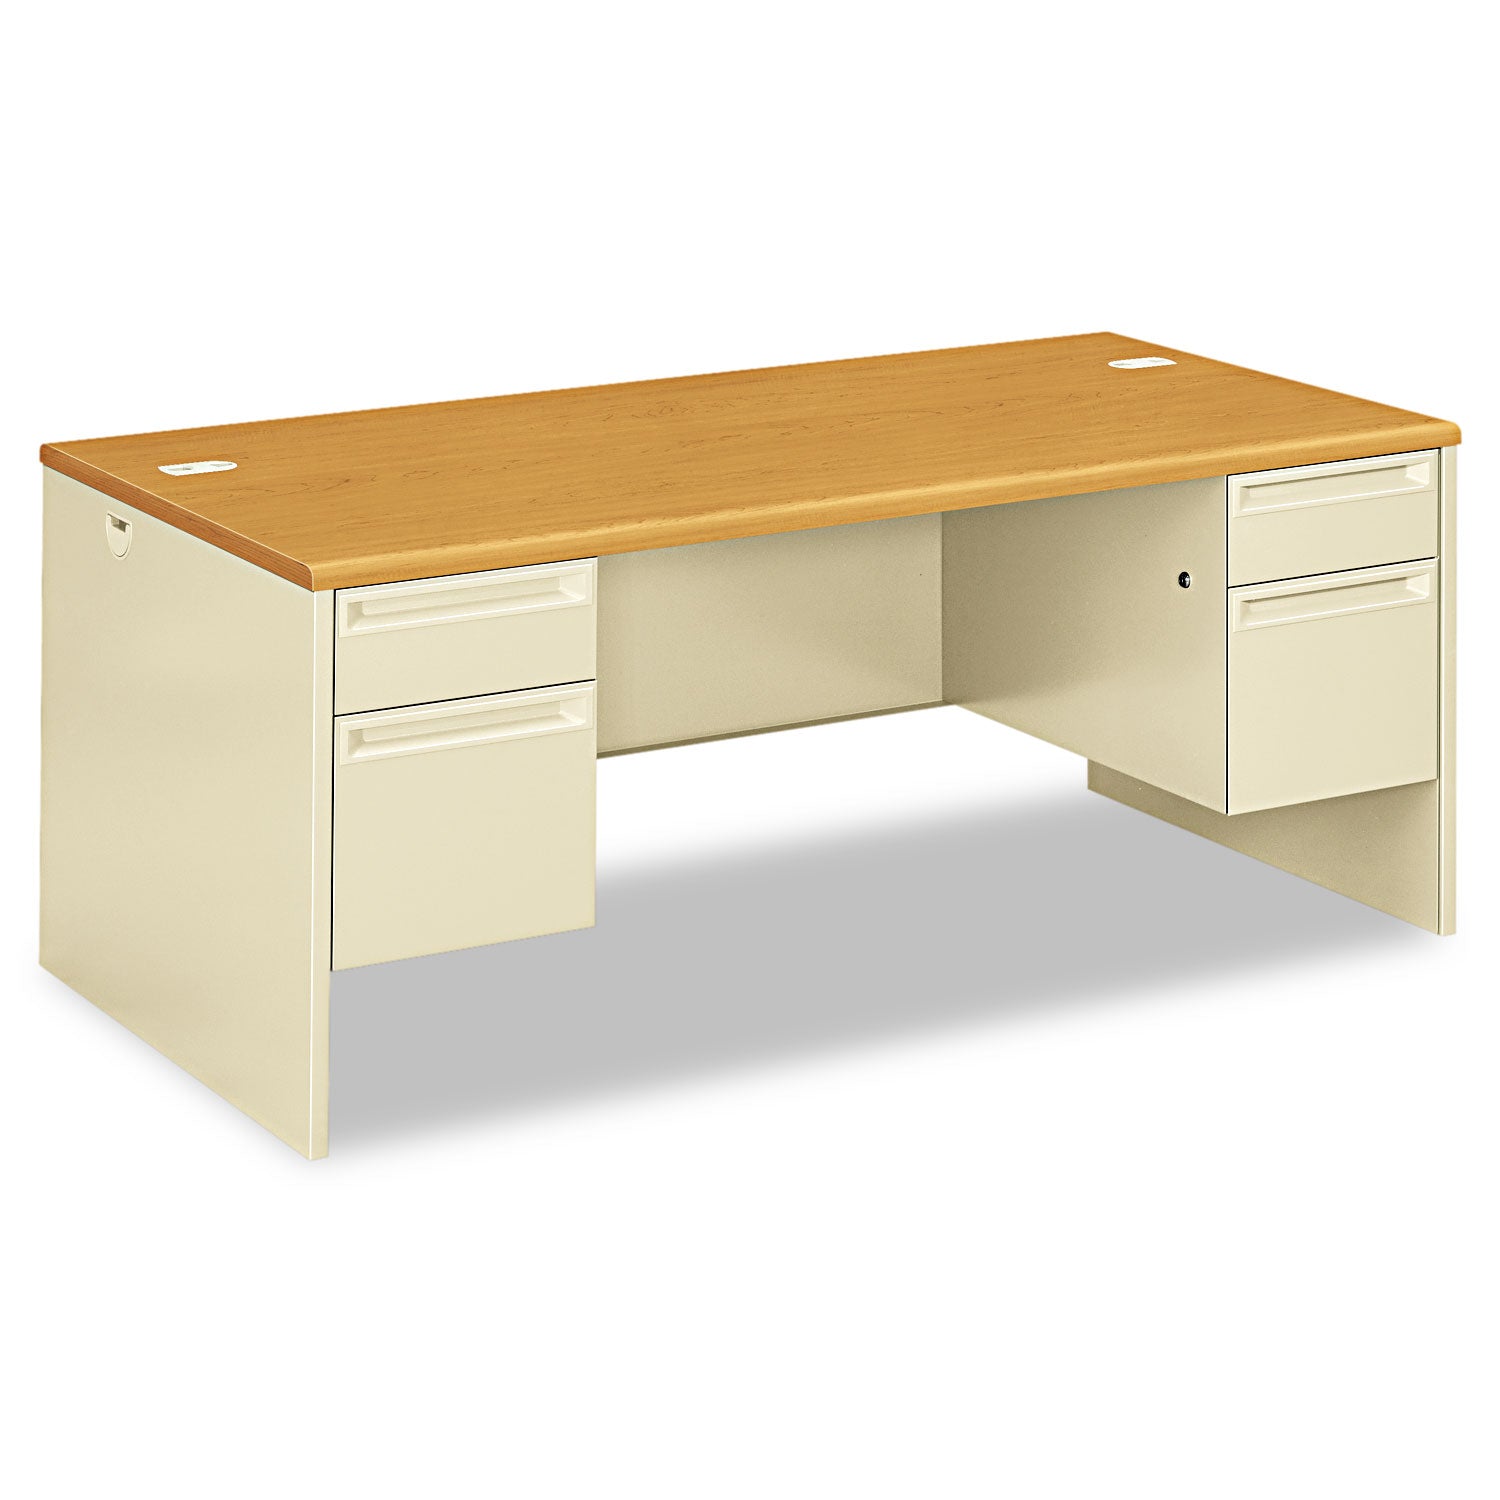 38000 Series Double Pedestal Desk, 72" x 36" x 29.5", Harvest/Putty - 